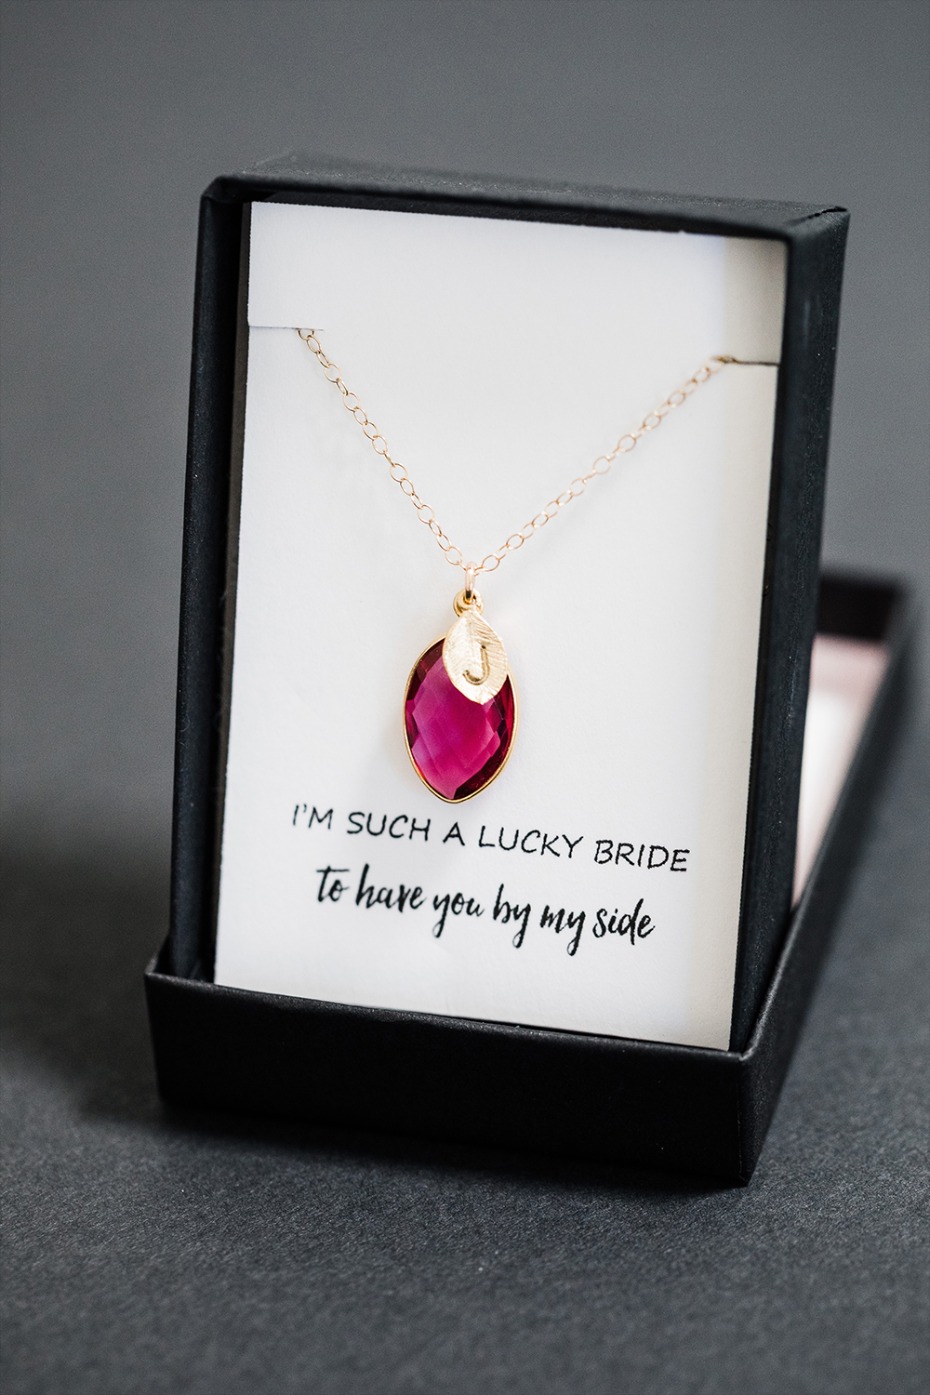 Birthstone bridesmaid gifts from Lilla Design